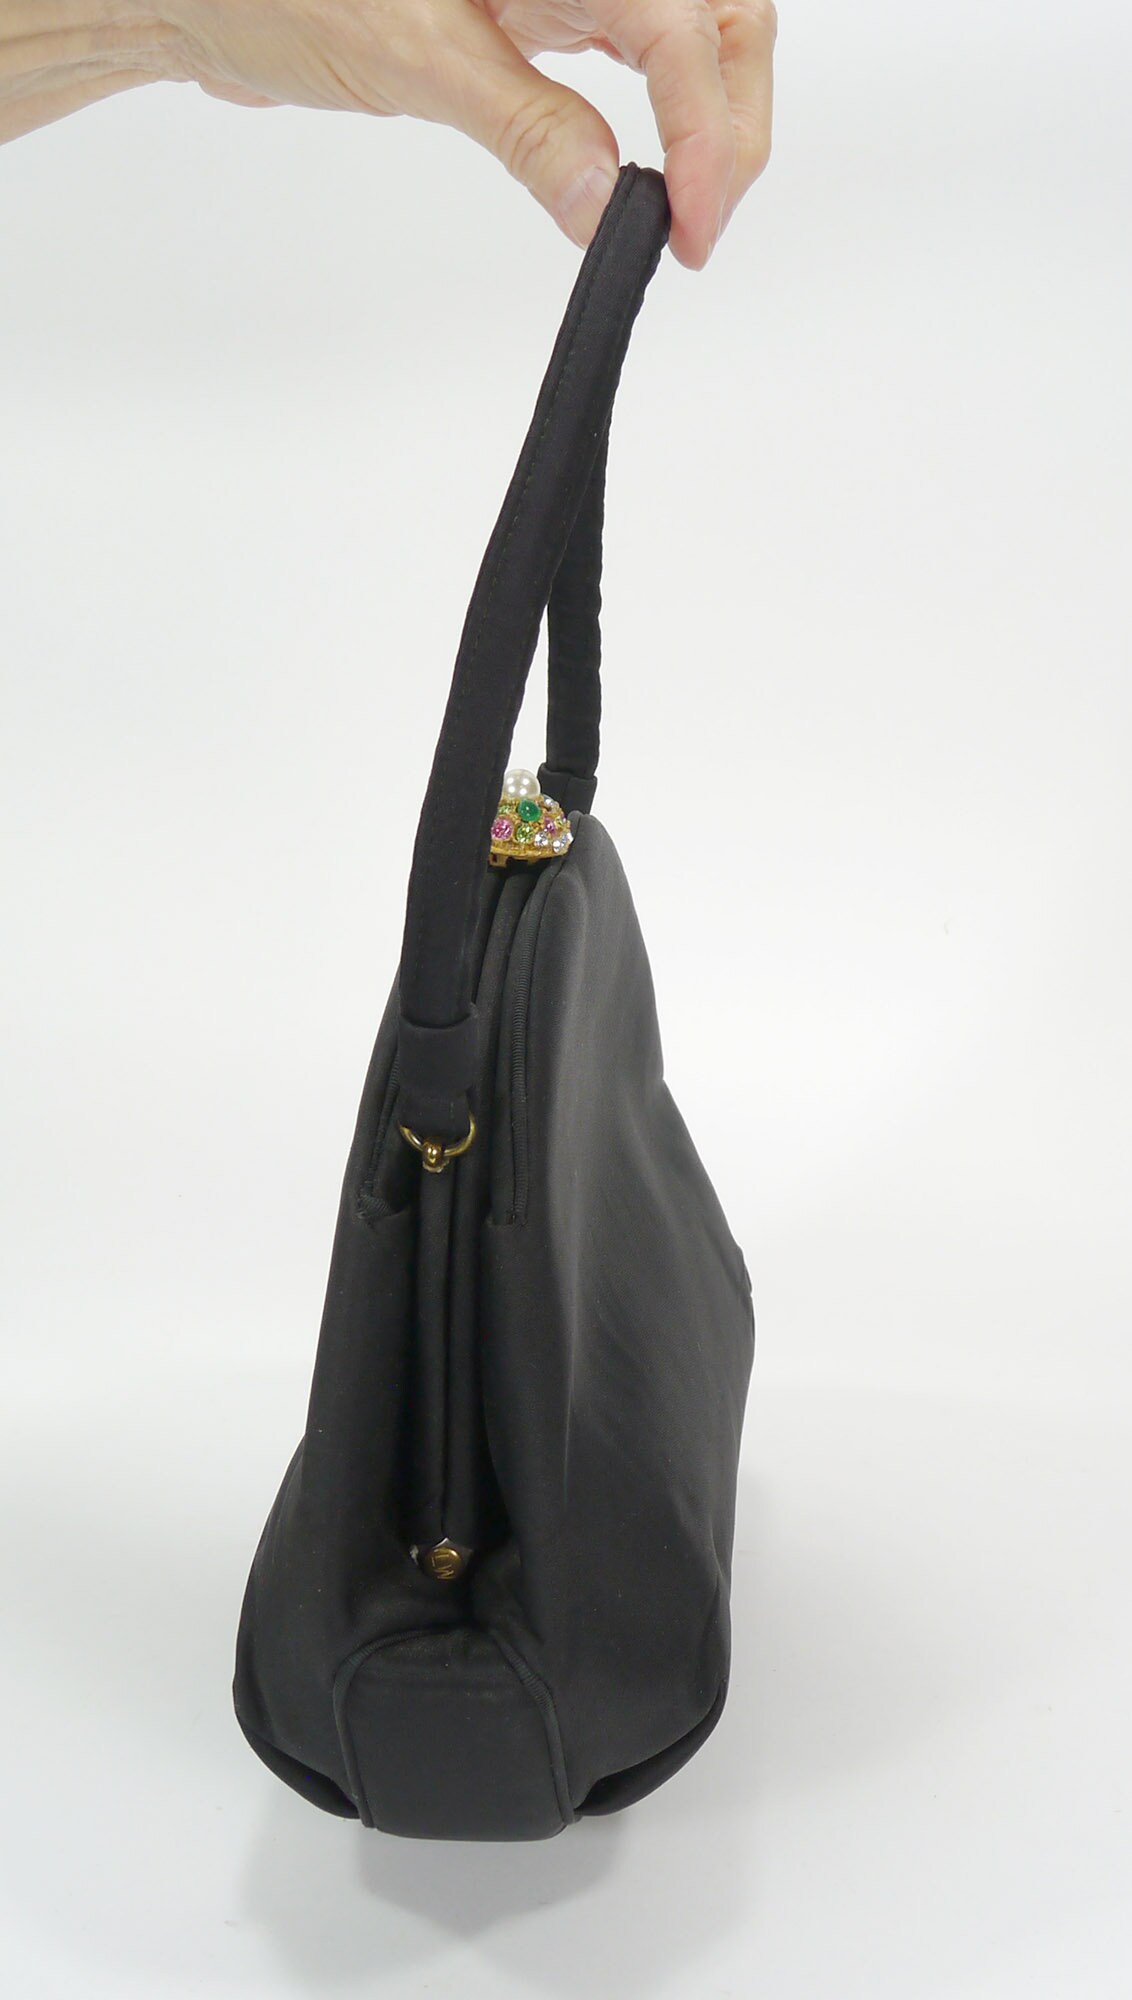 1948 Ad Vintage Lewis Purses Lady's Handbag Bag Fashion Logo Crown Trademark